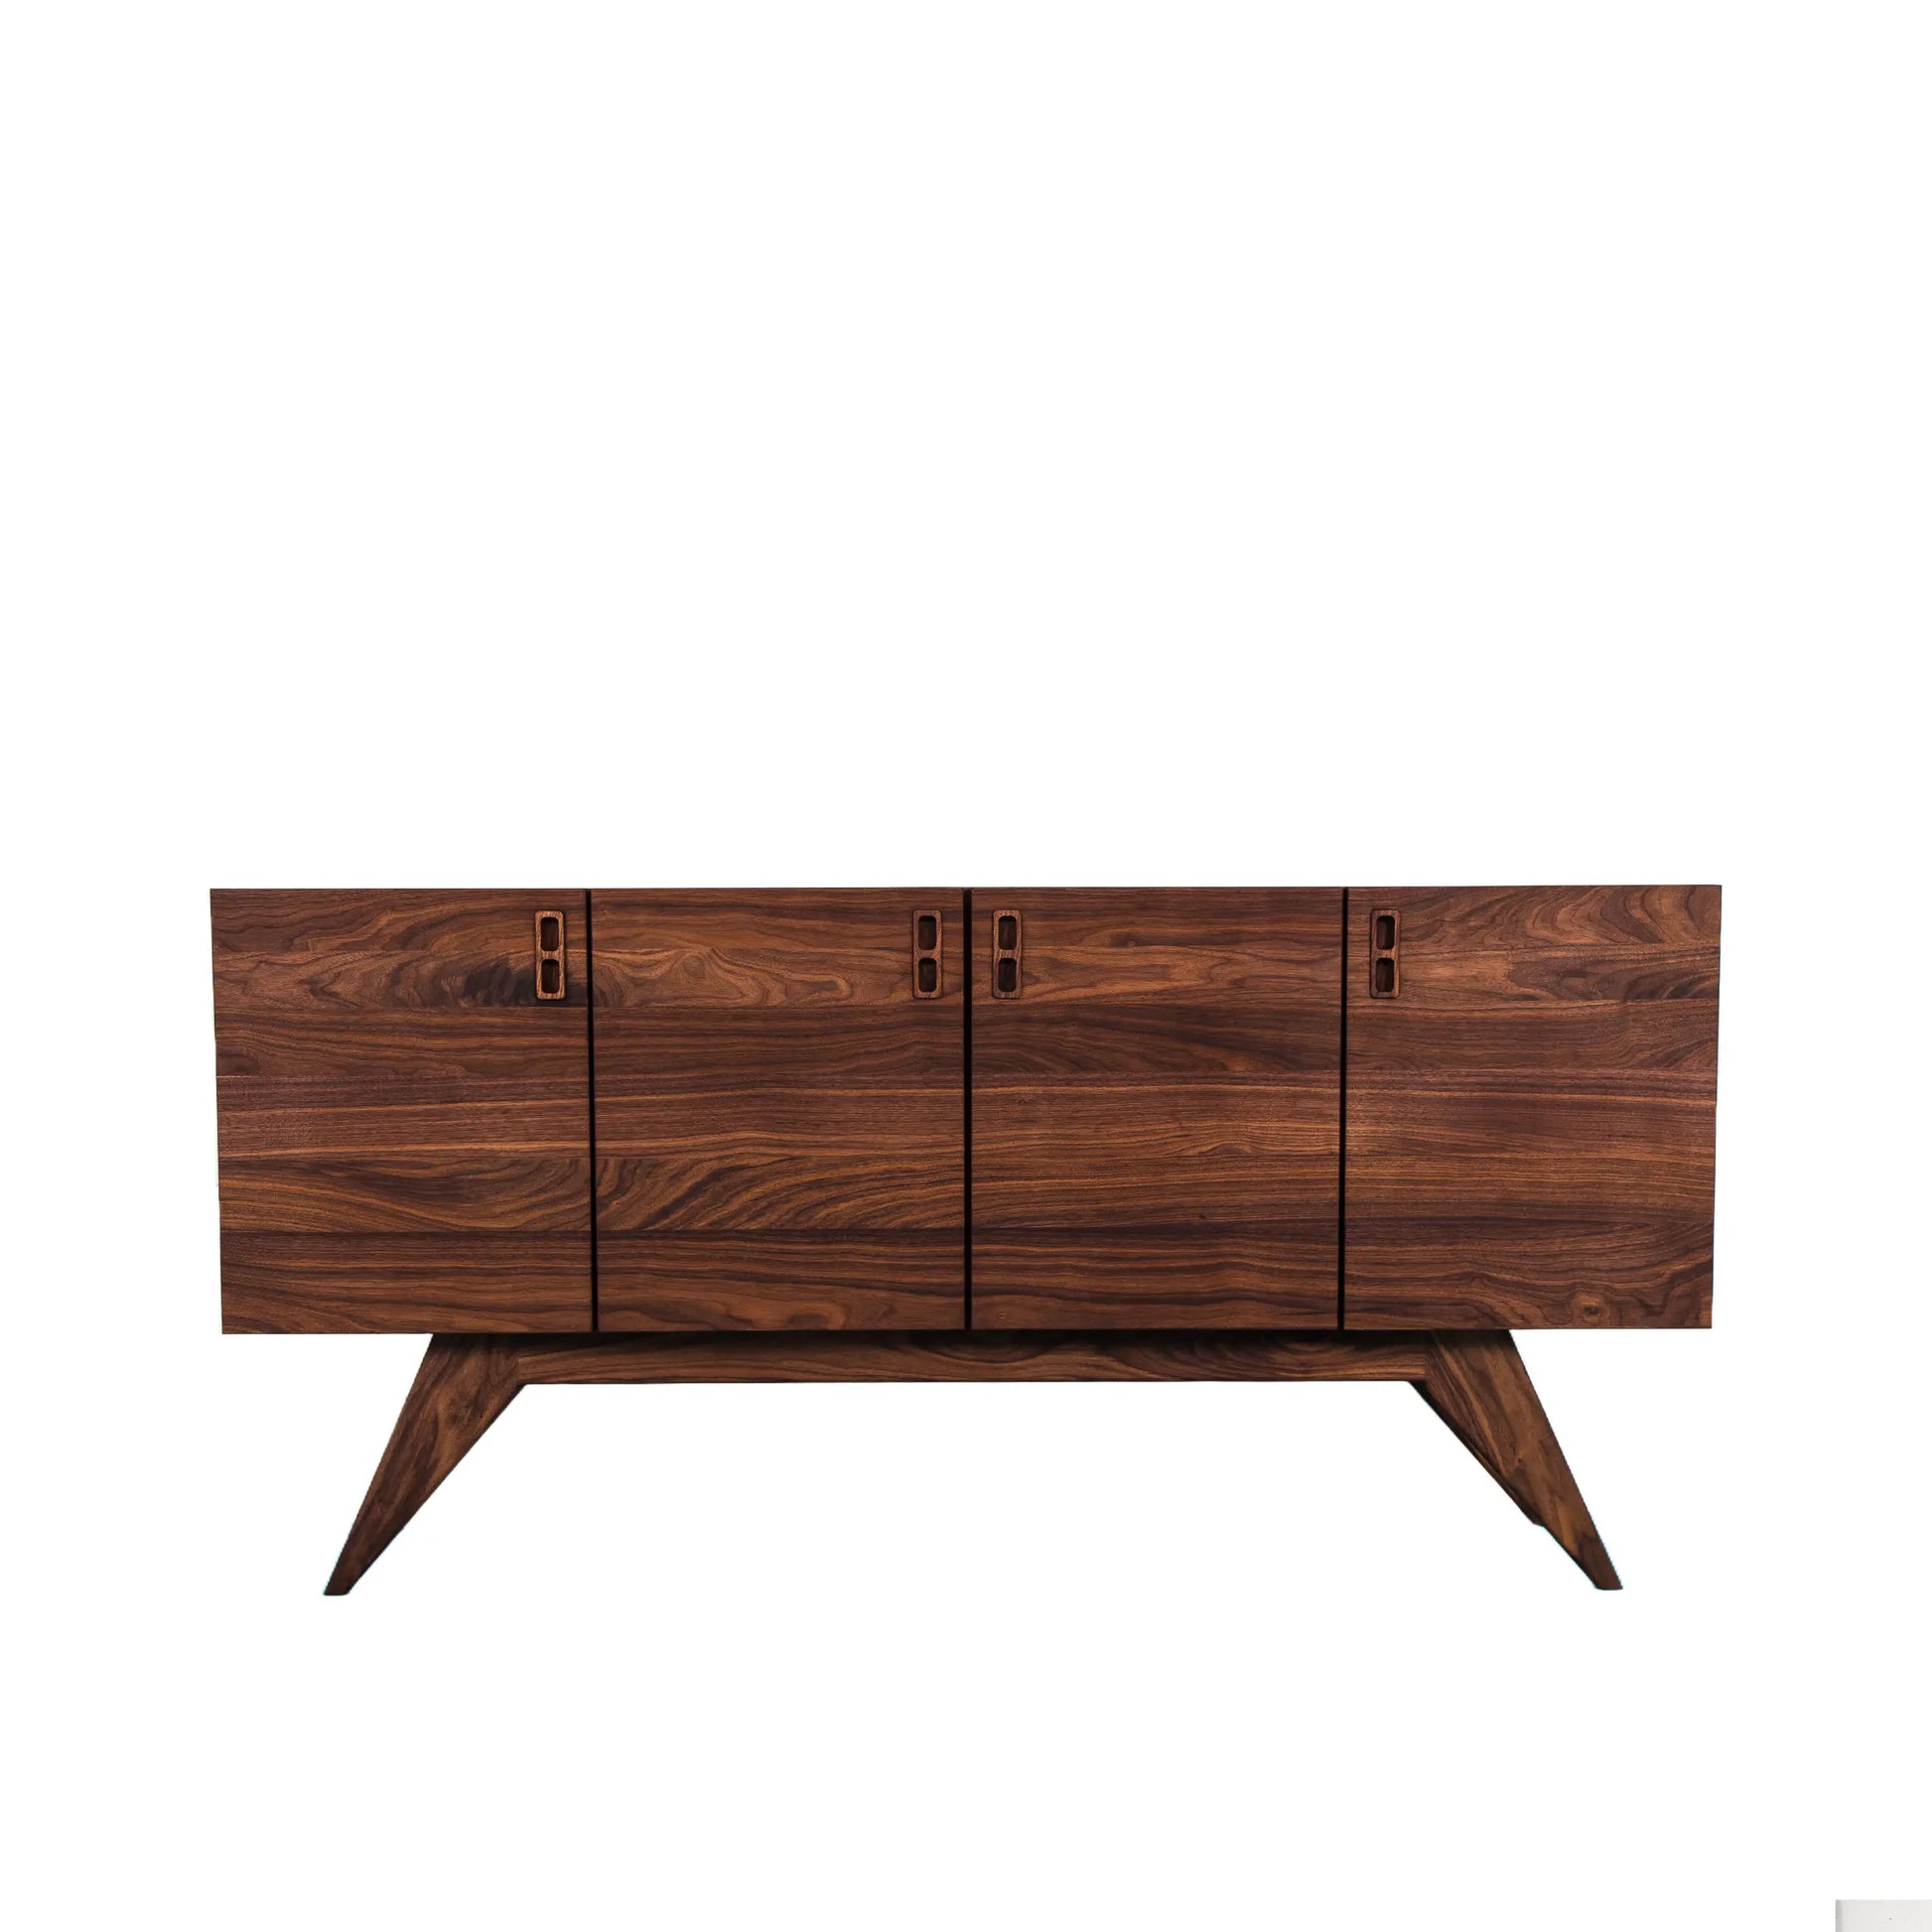 Lareaux's Furniture Wax | Moderncre8ve